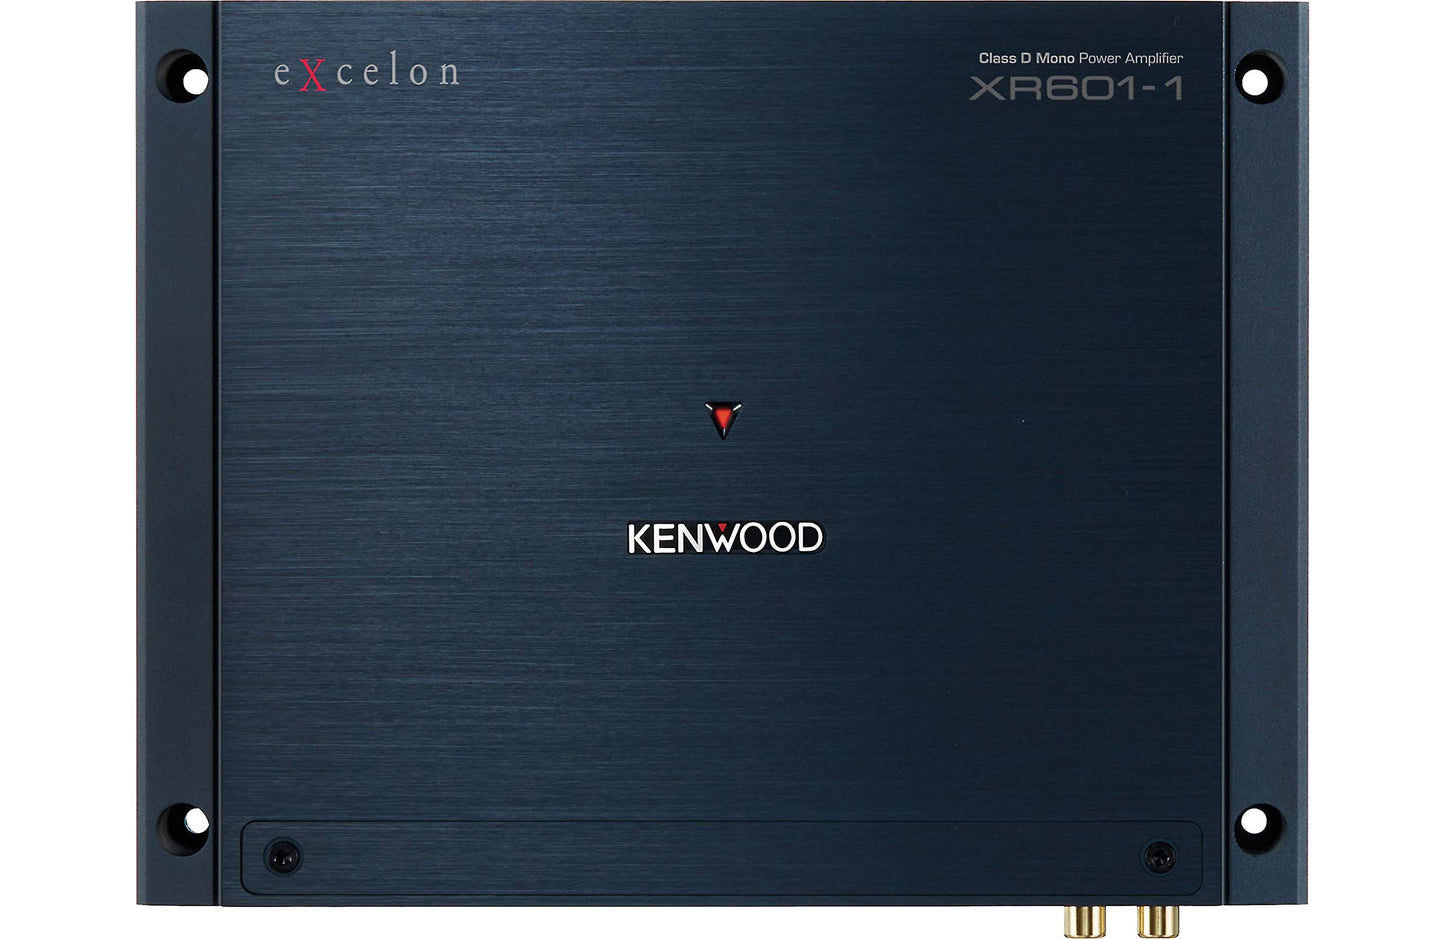 Kenwood XR601-1 eXcelon 600-Watt Monoblock Subwoofer Amplifier